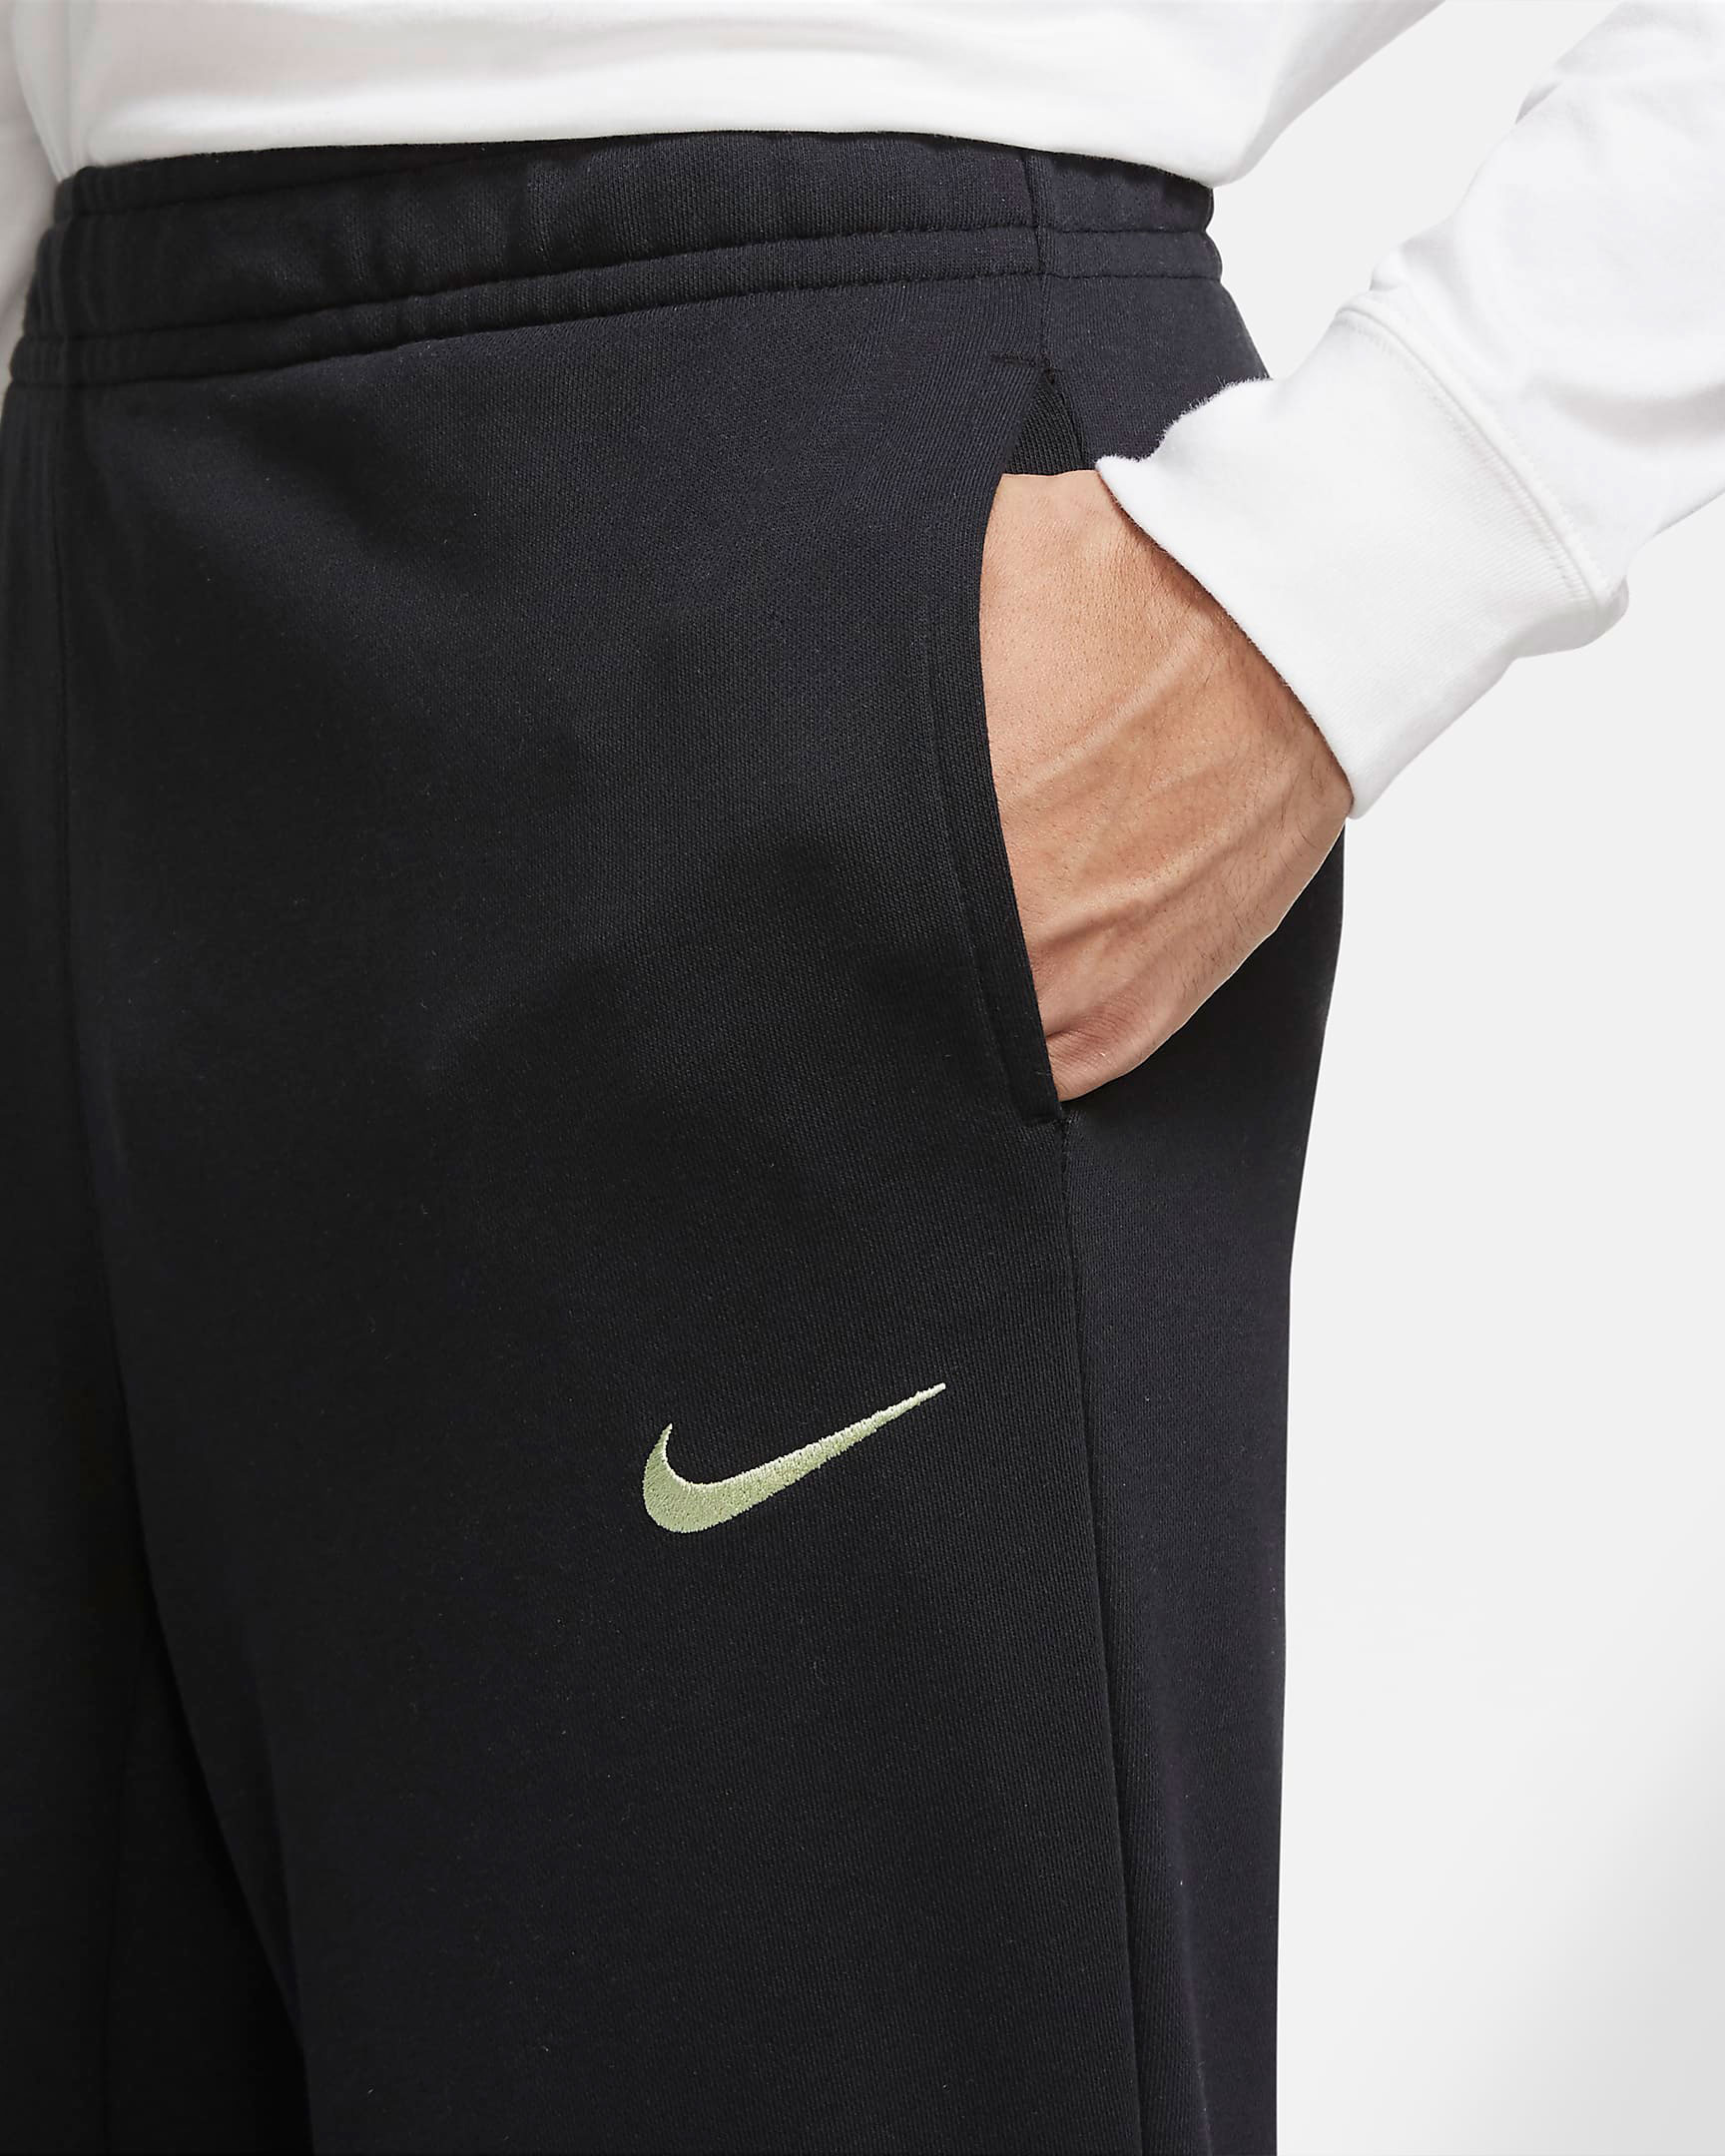 nike-sportswear-class-of-72-jogger-pants-black-volt-3